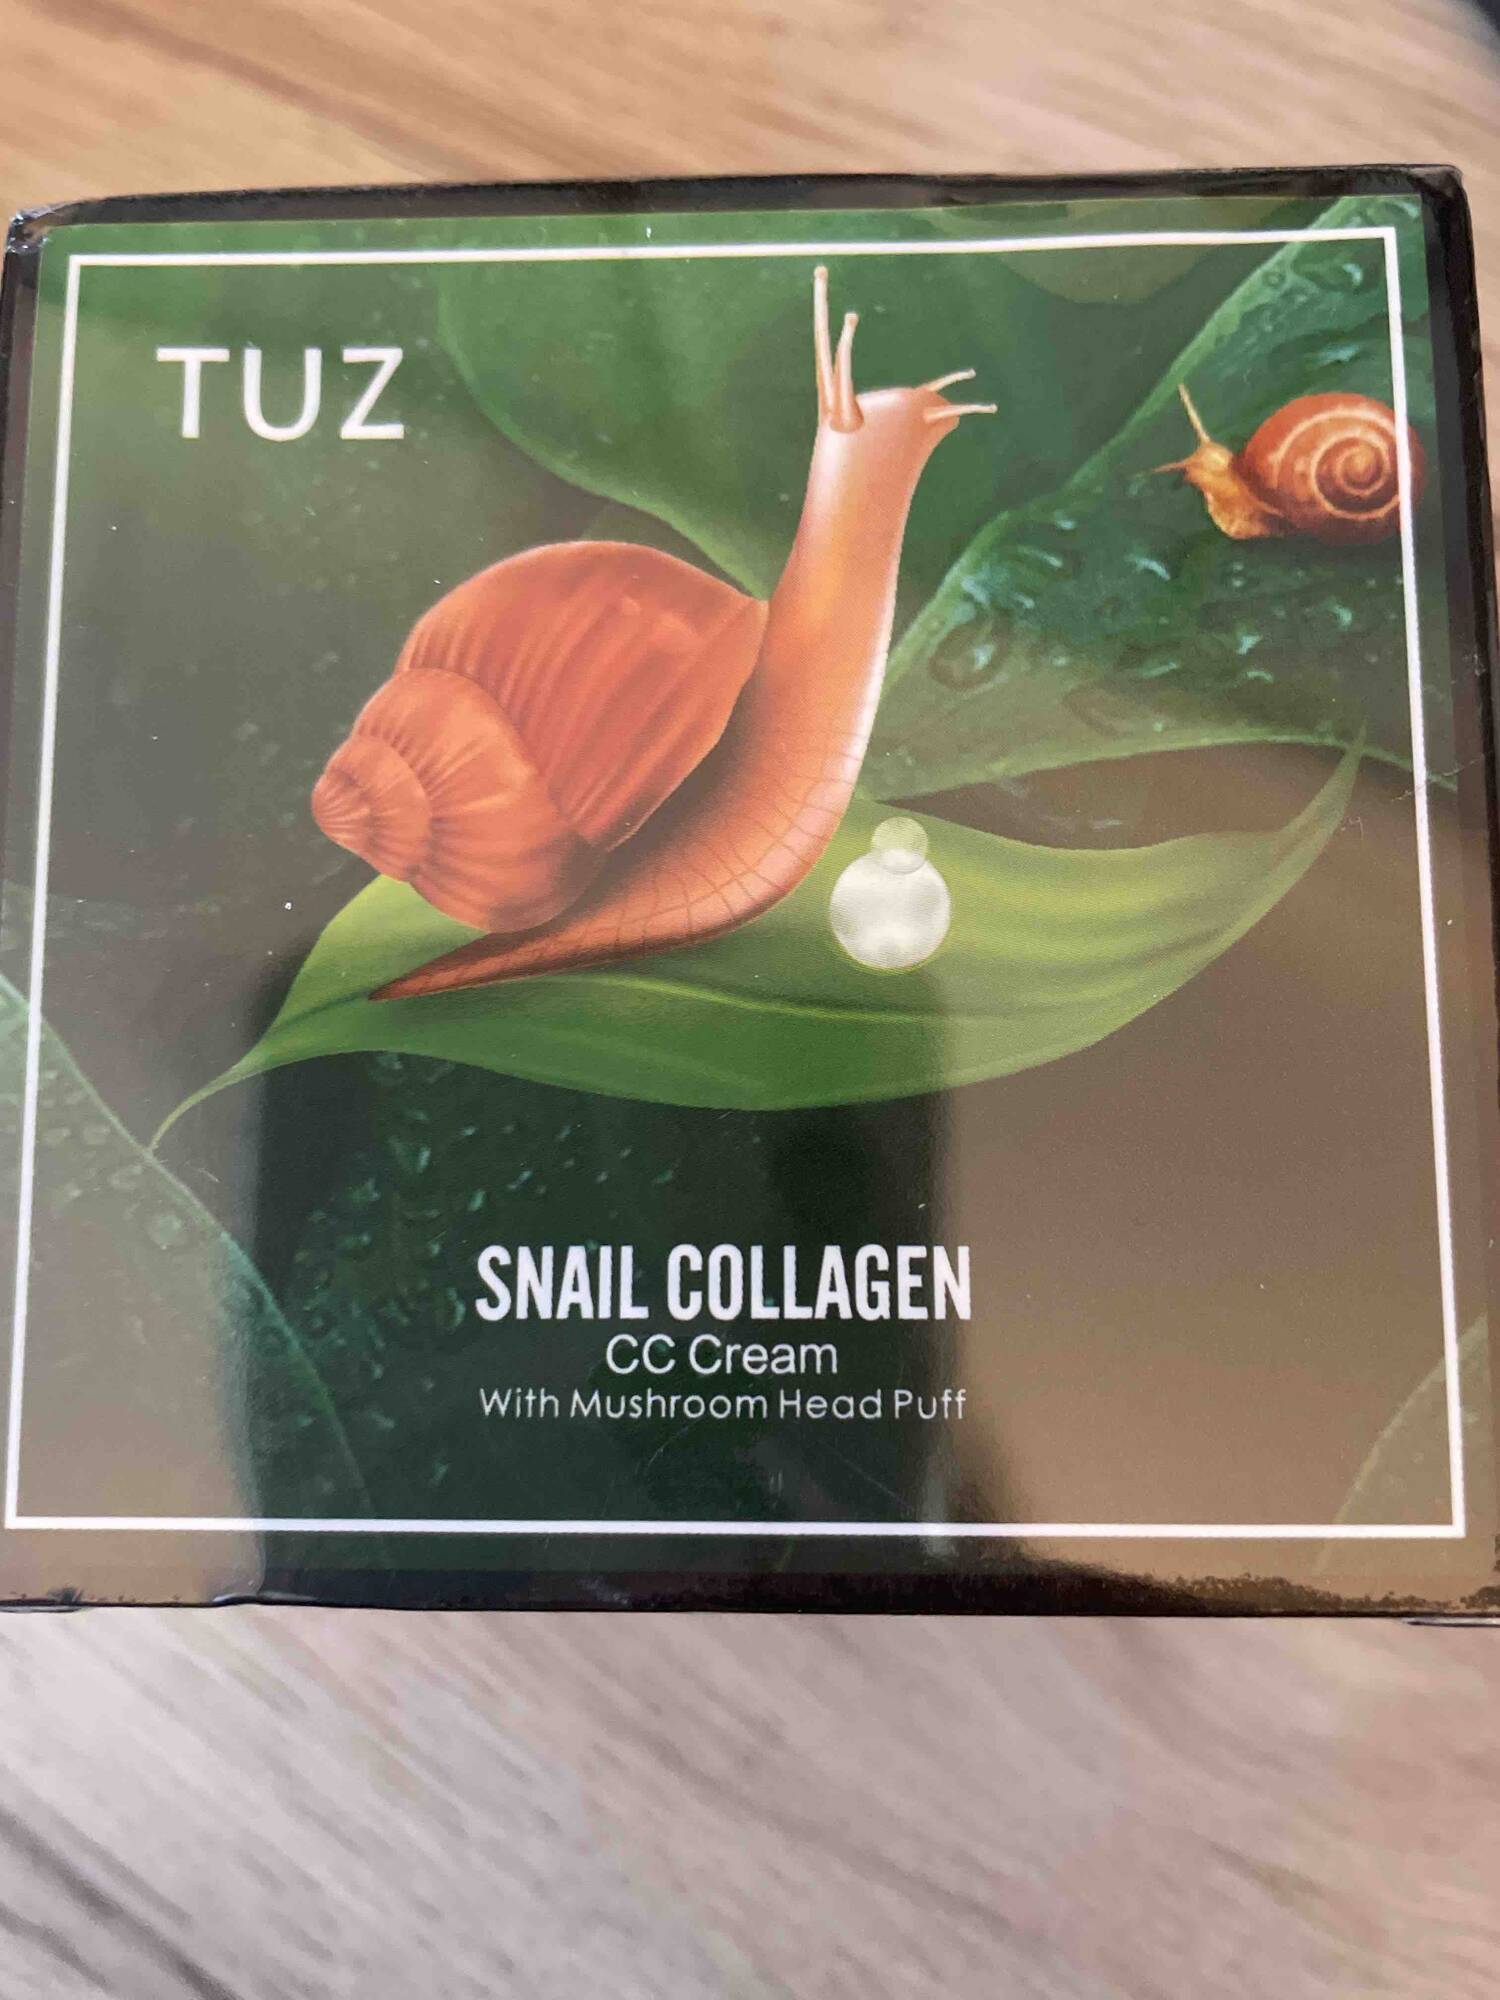 TUZ - Snail collagen - CC cream with mushroom head puff